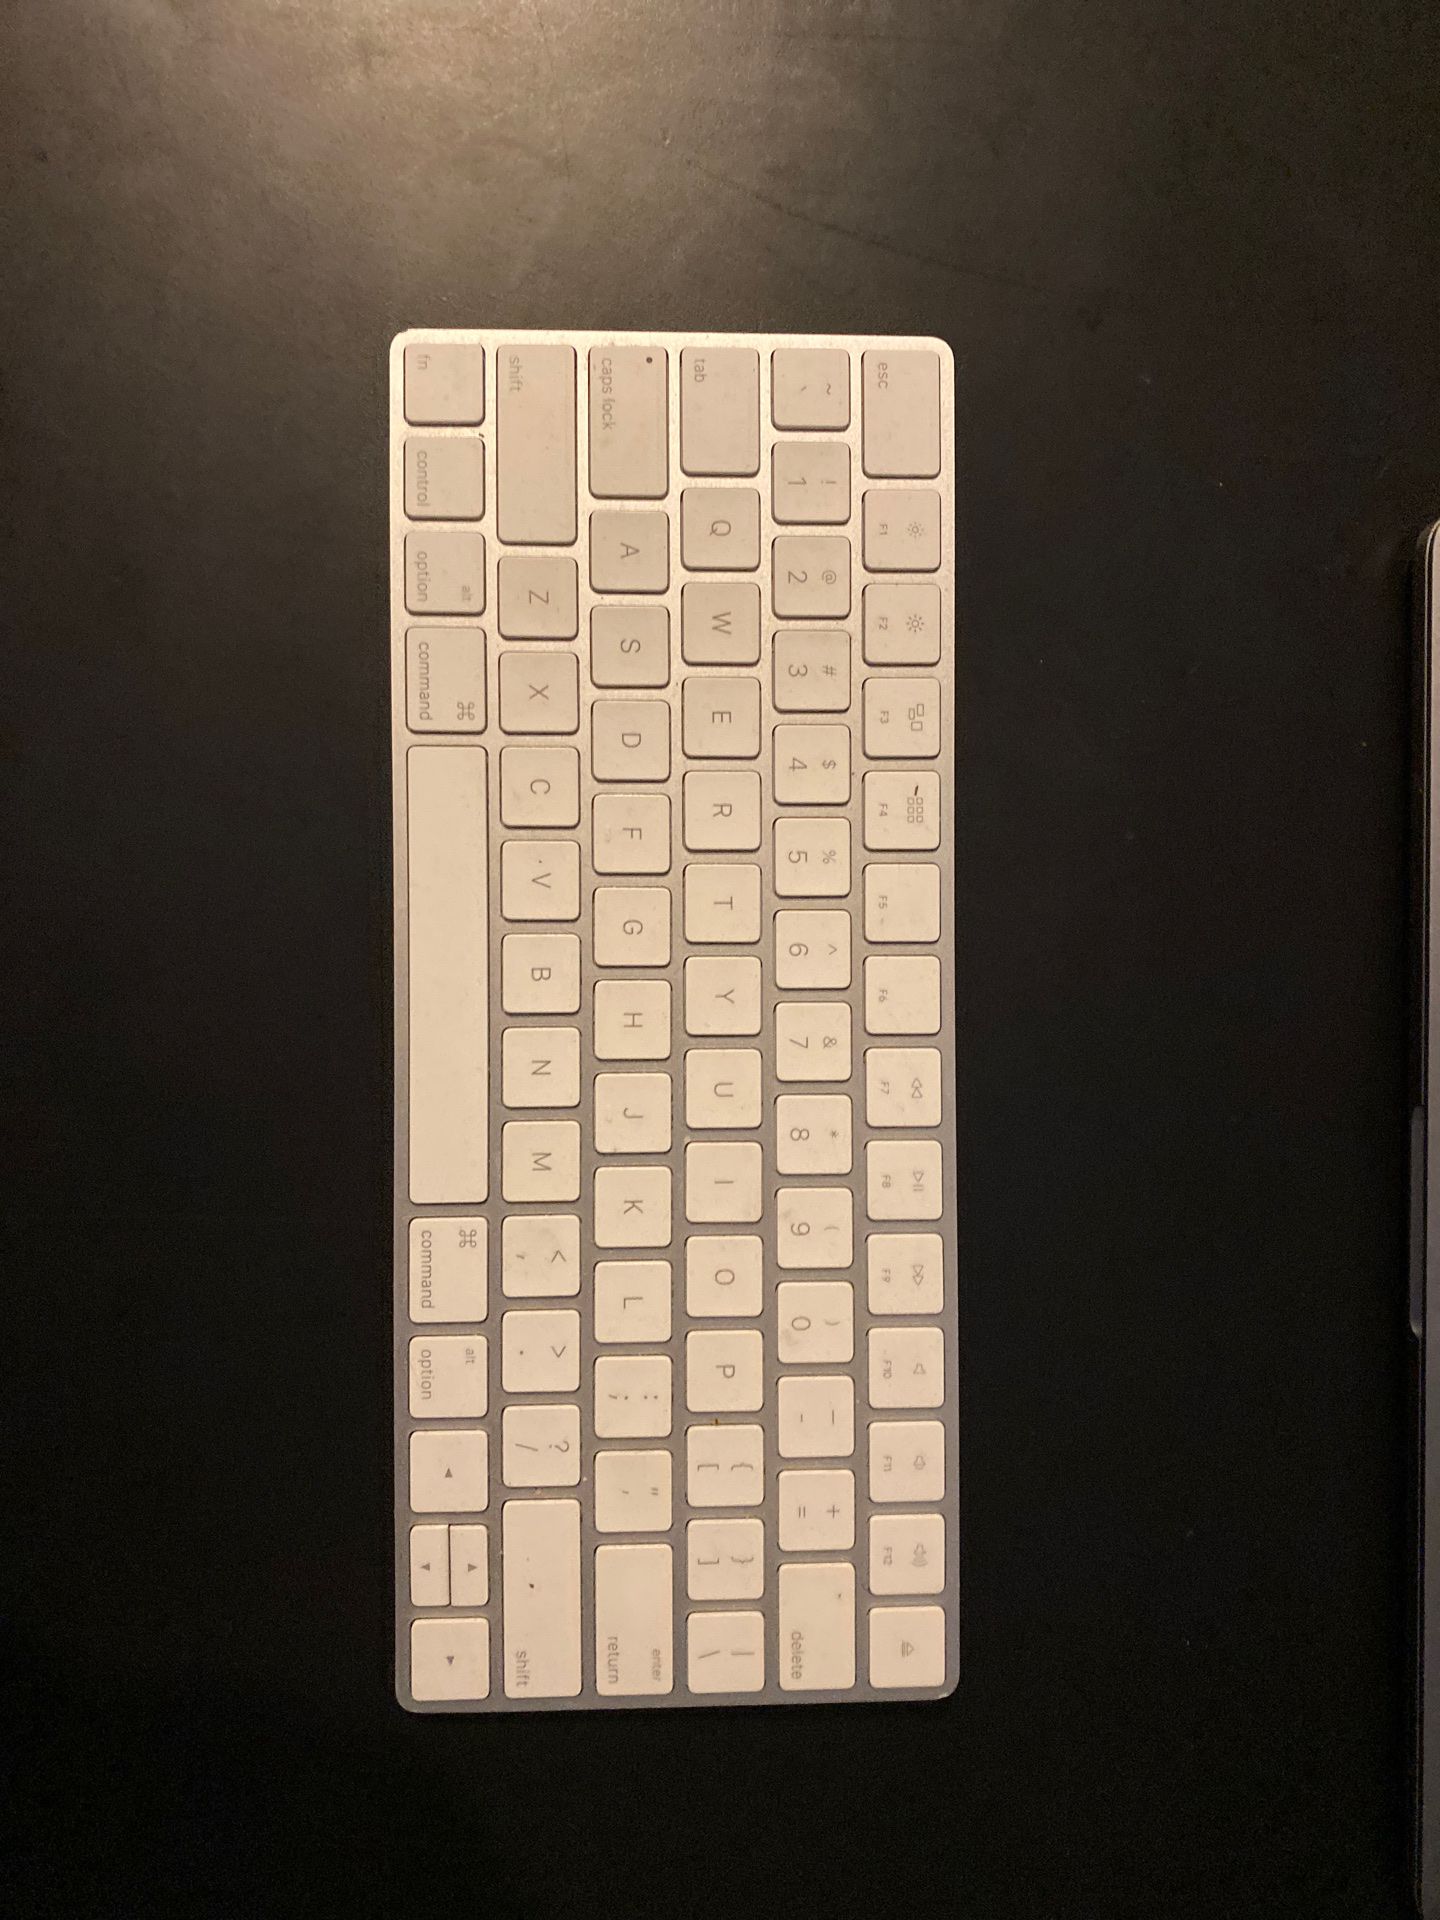 Apple keyboard works perfectly